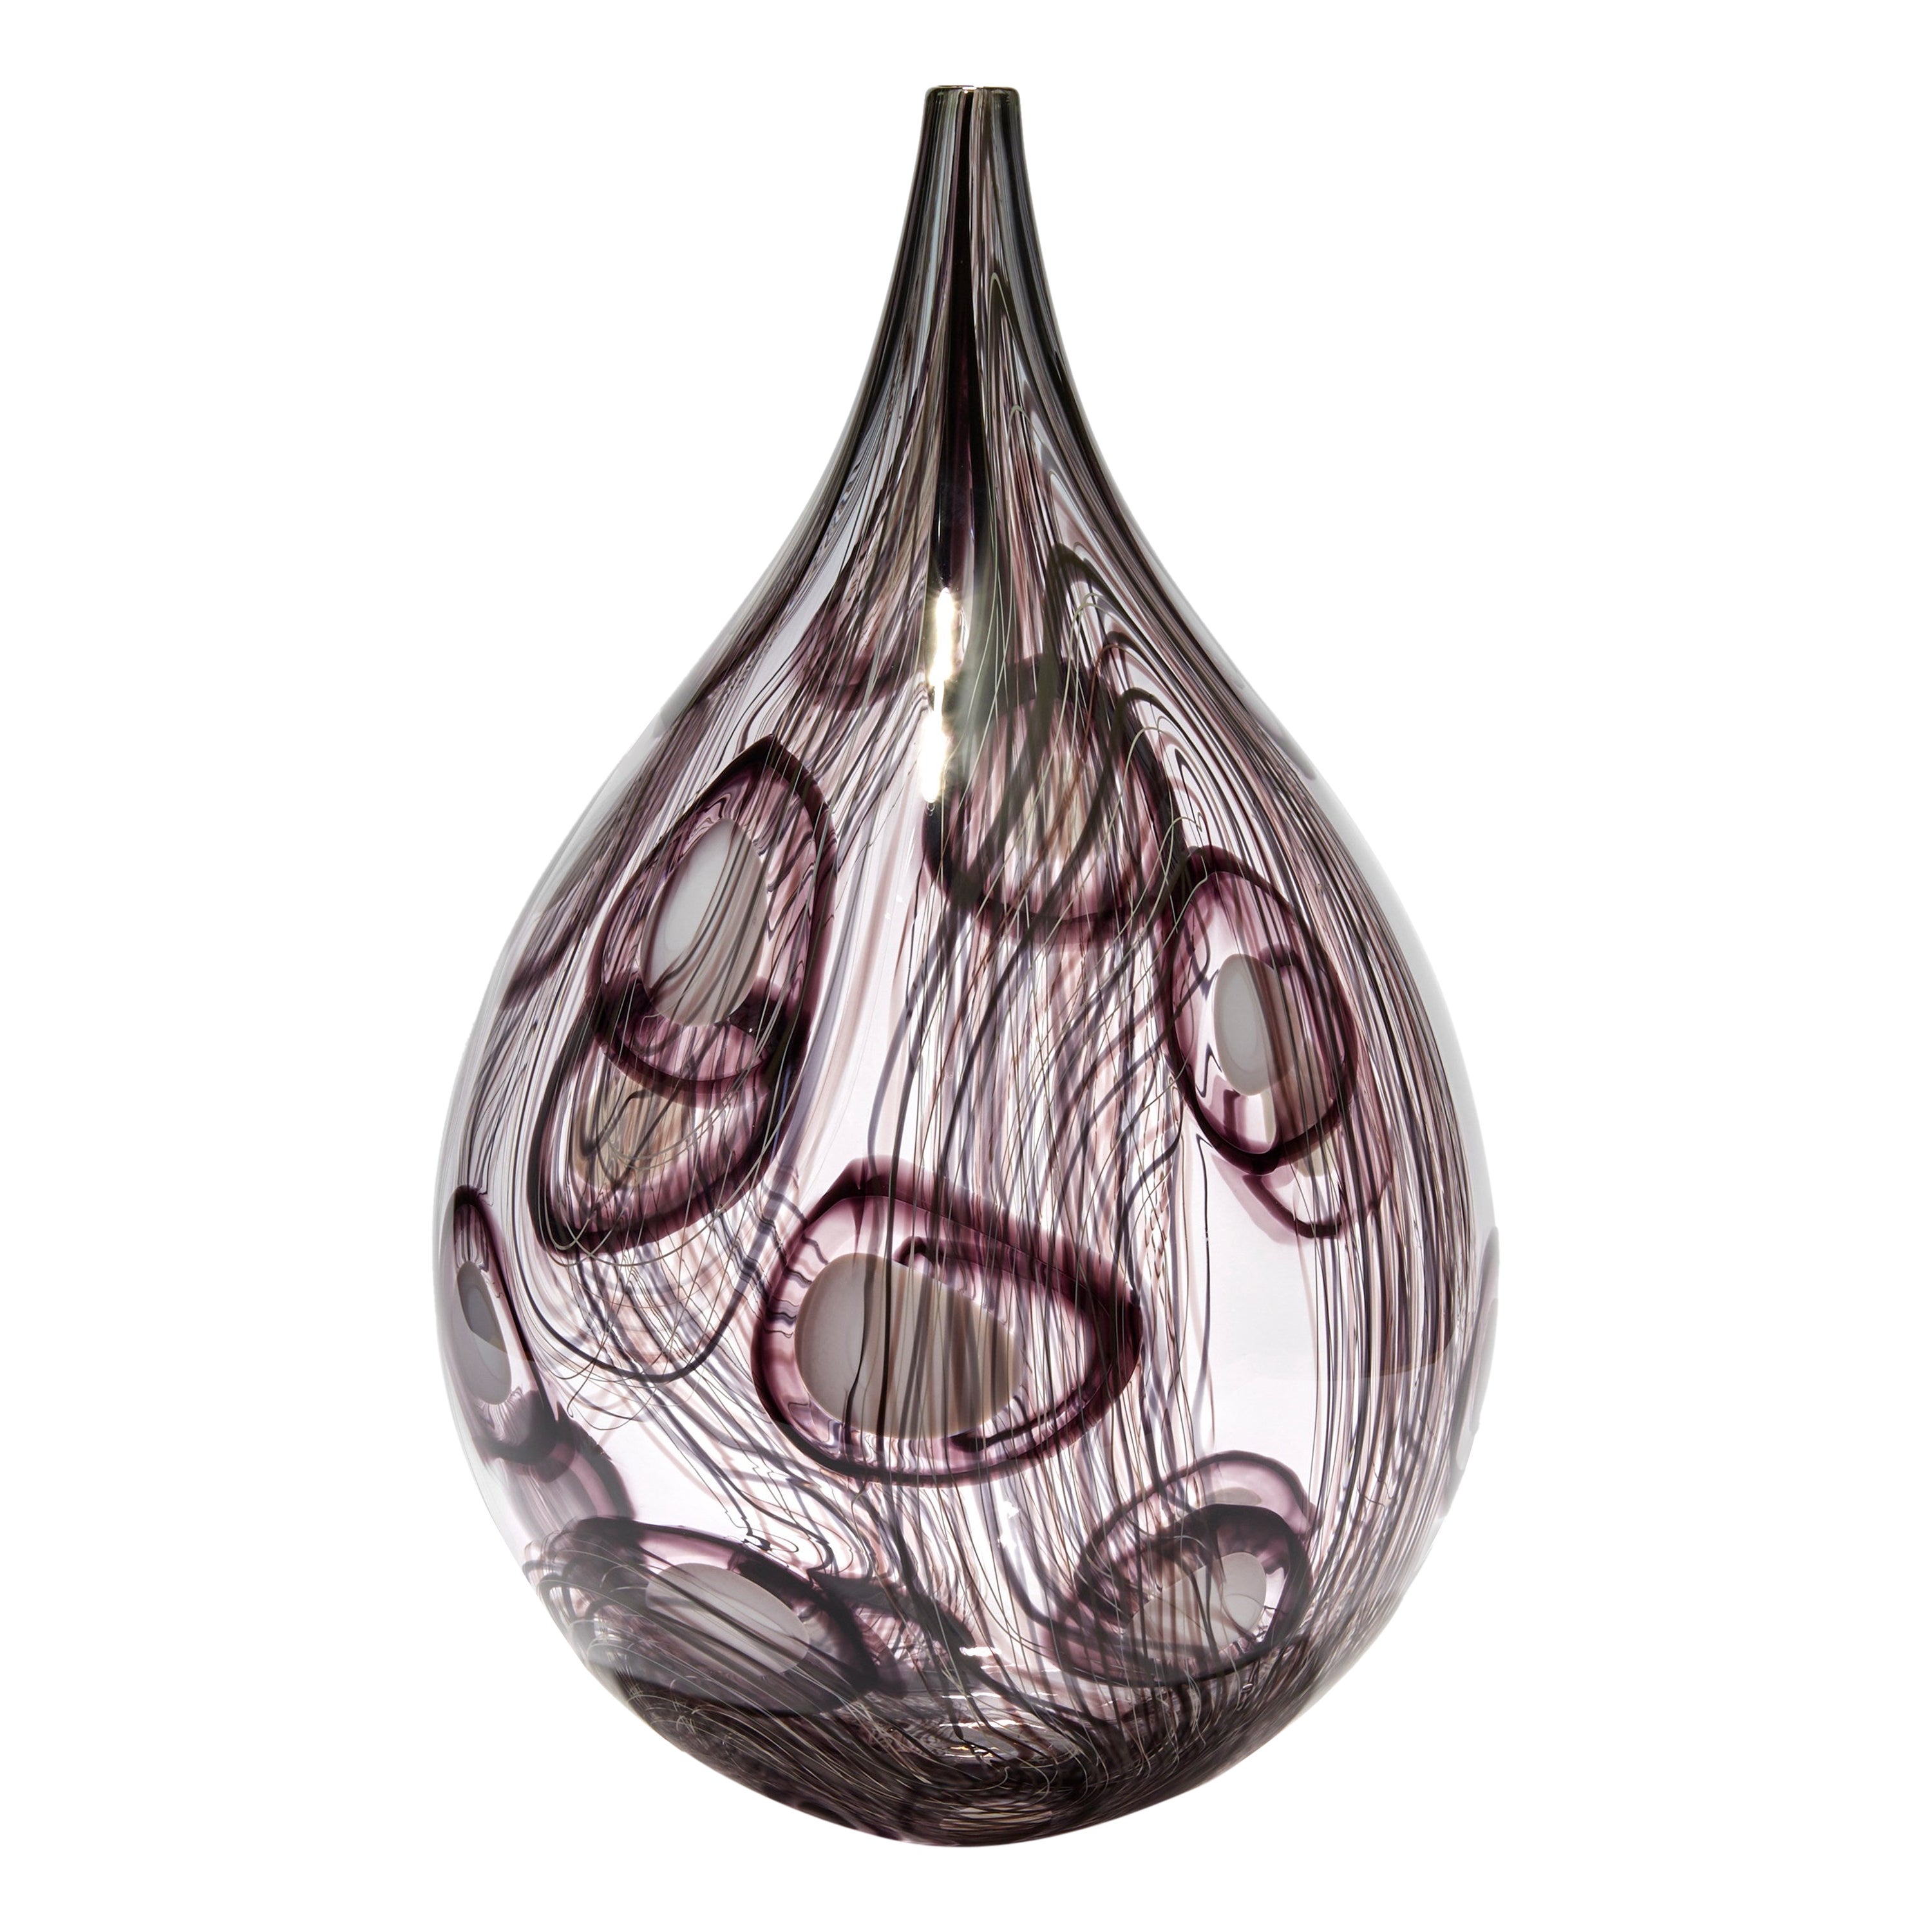 Rings iv, a Black / Aubergine & Clear Sculptural Glass Vessel by Ann Wåhlström For Sale